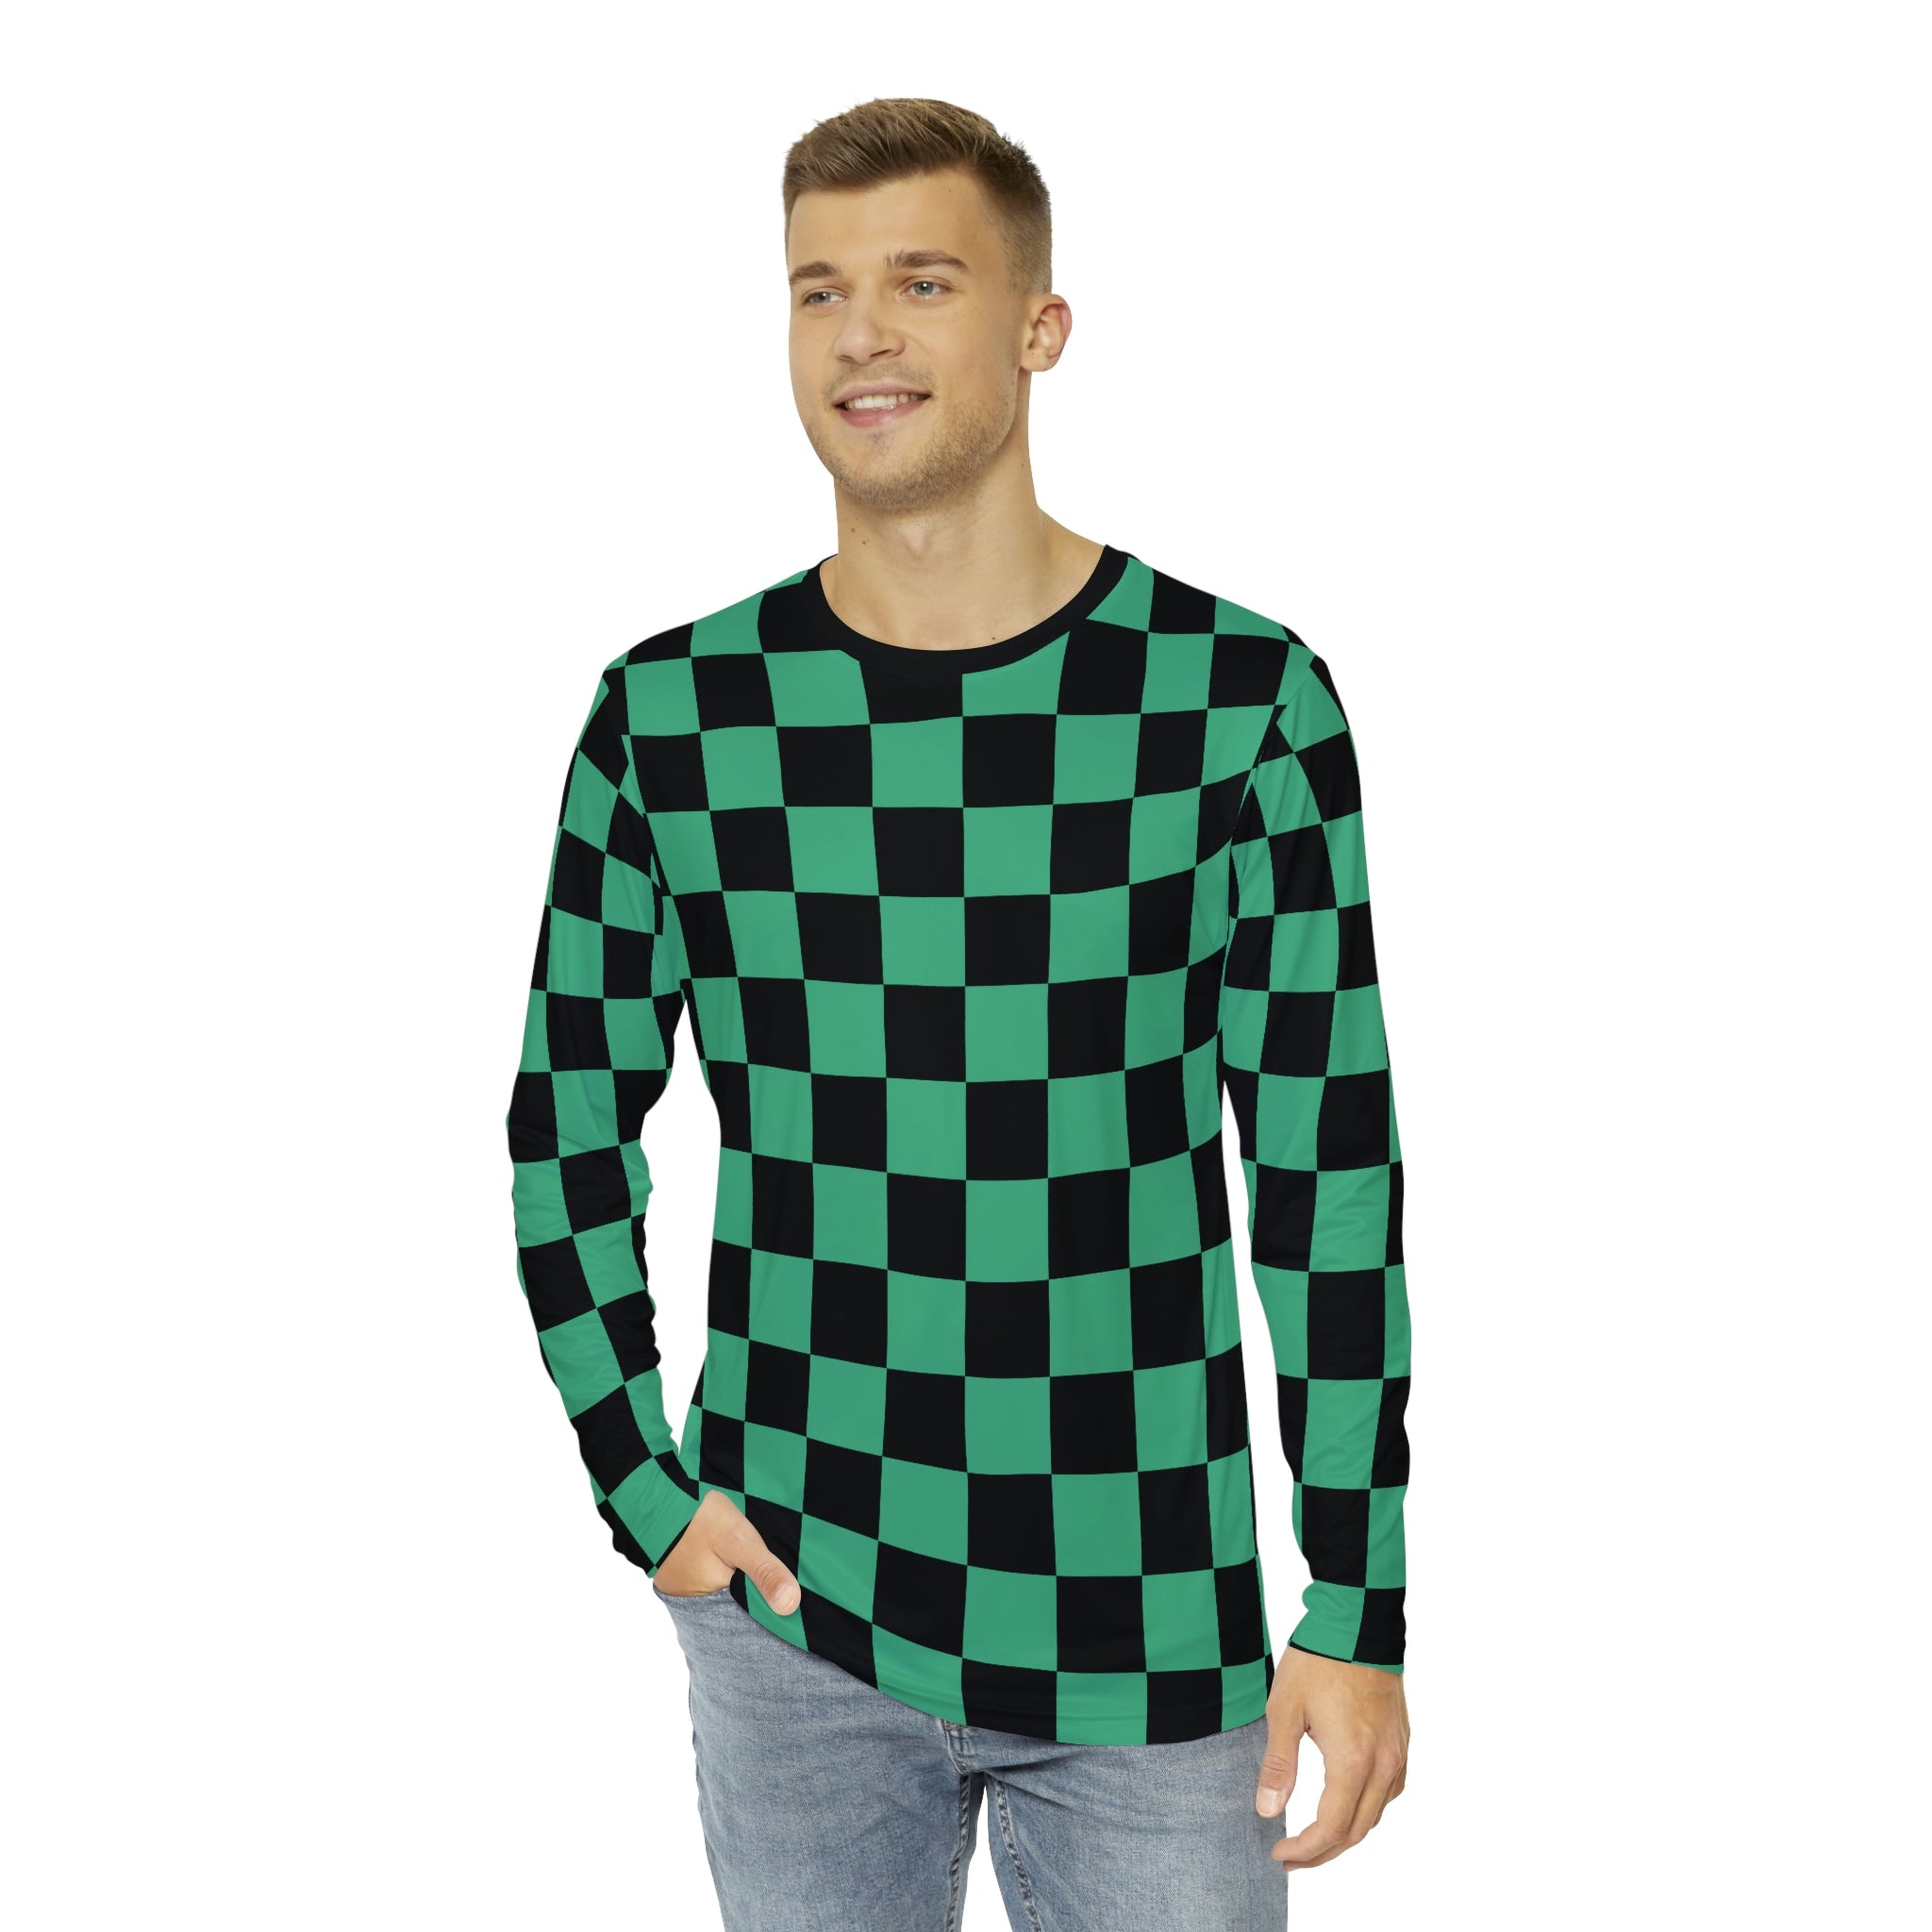 Green and Black Checkerboard Long Sleeve Shirt Uniform Costume